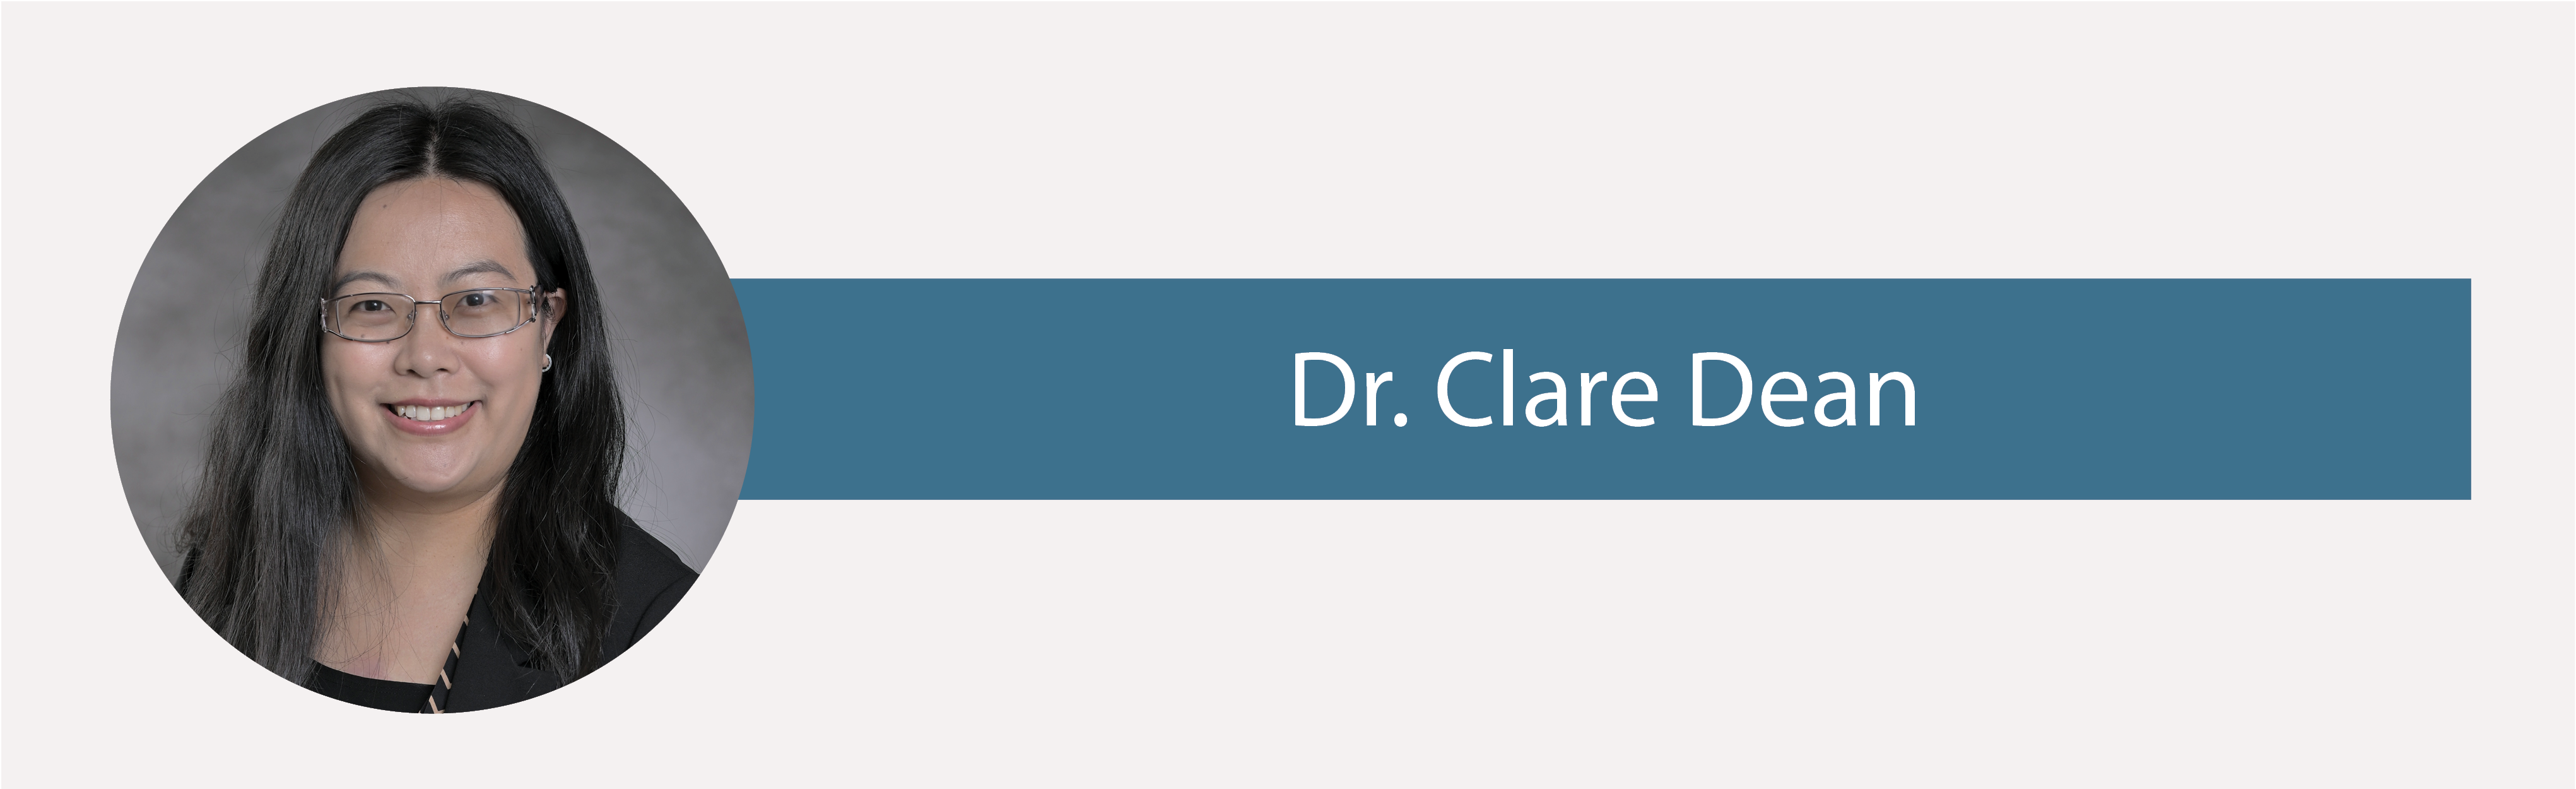 ENT Physician Dr. Clare Dean Joins White Plains Hospital